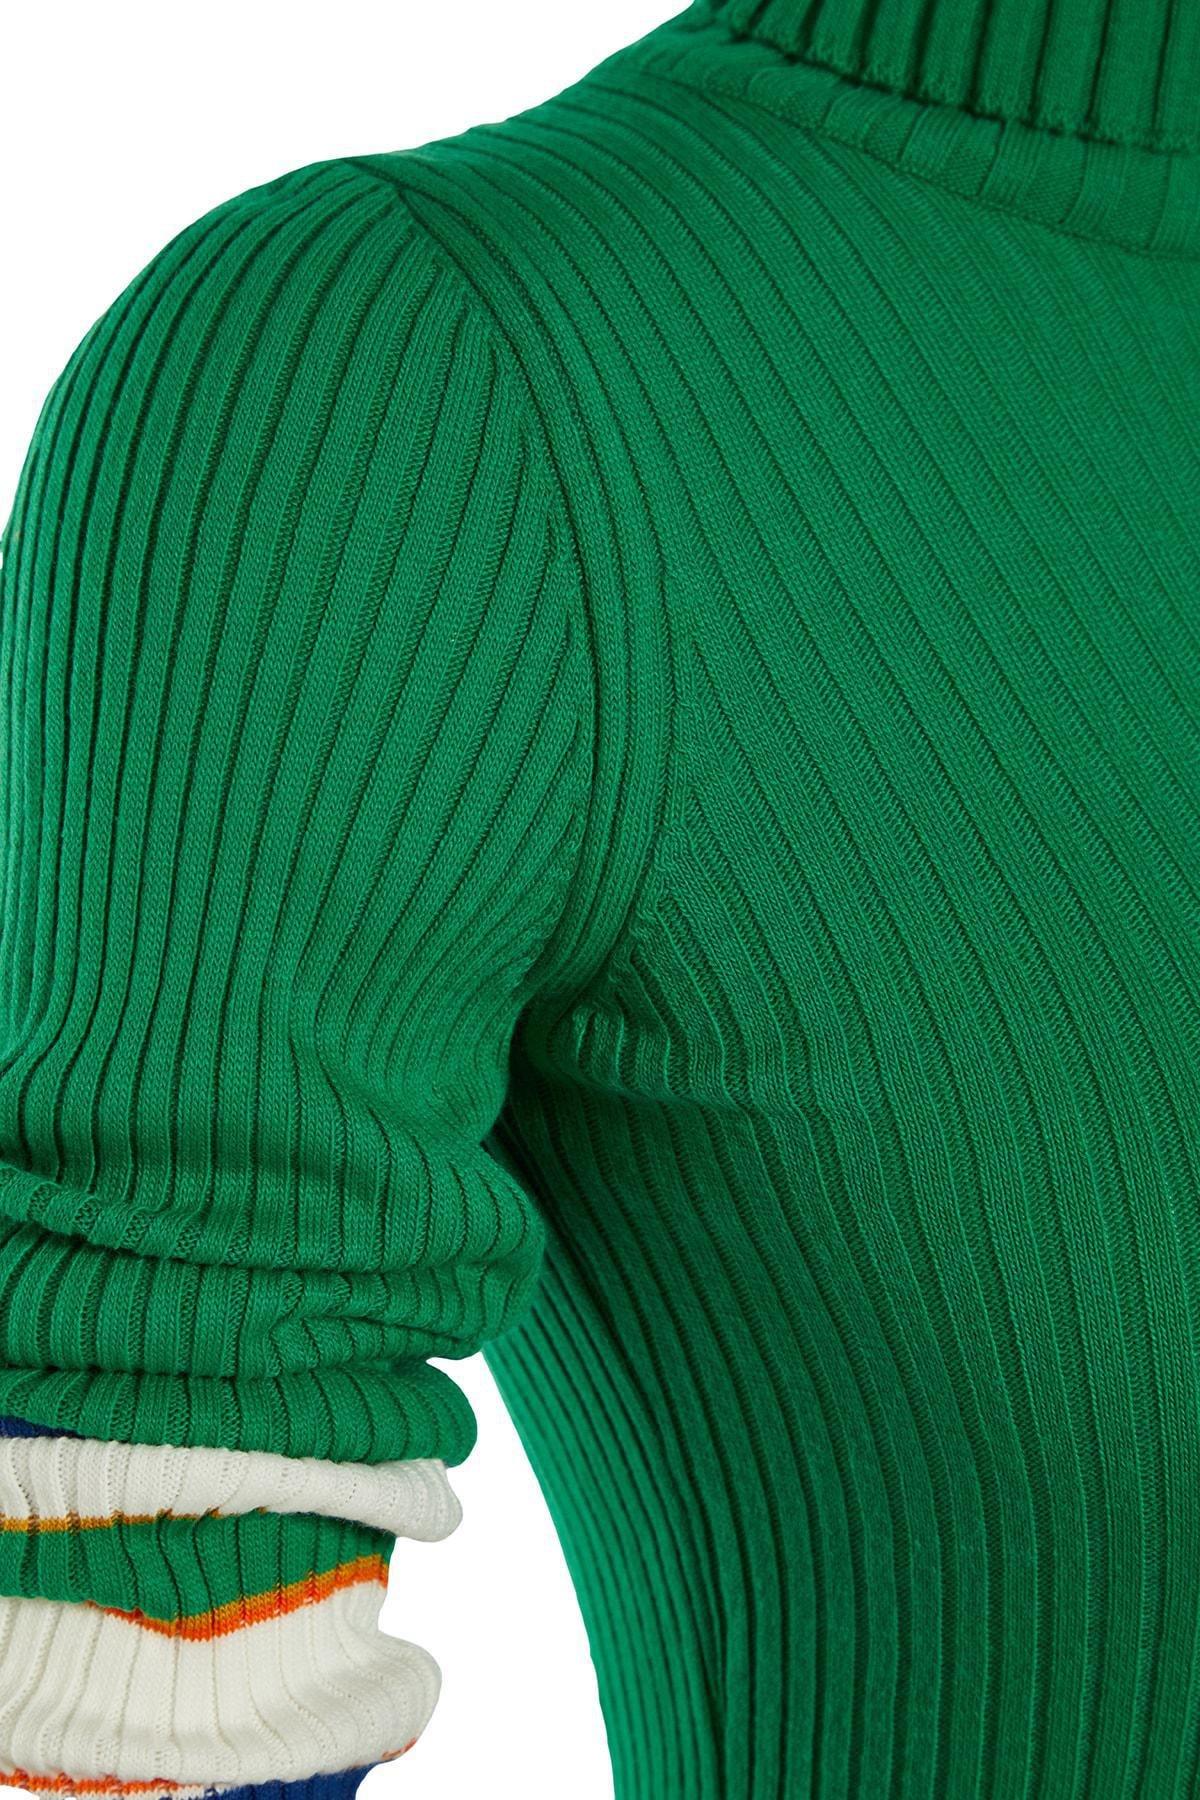 Trendyol - Green Basic Maxi Dress